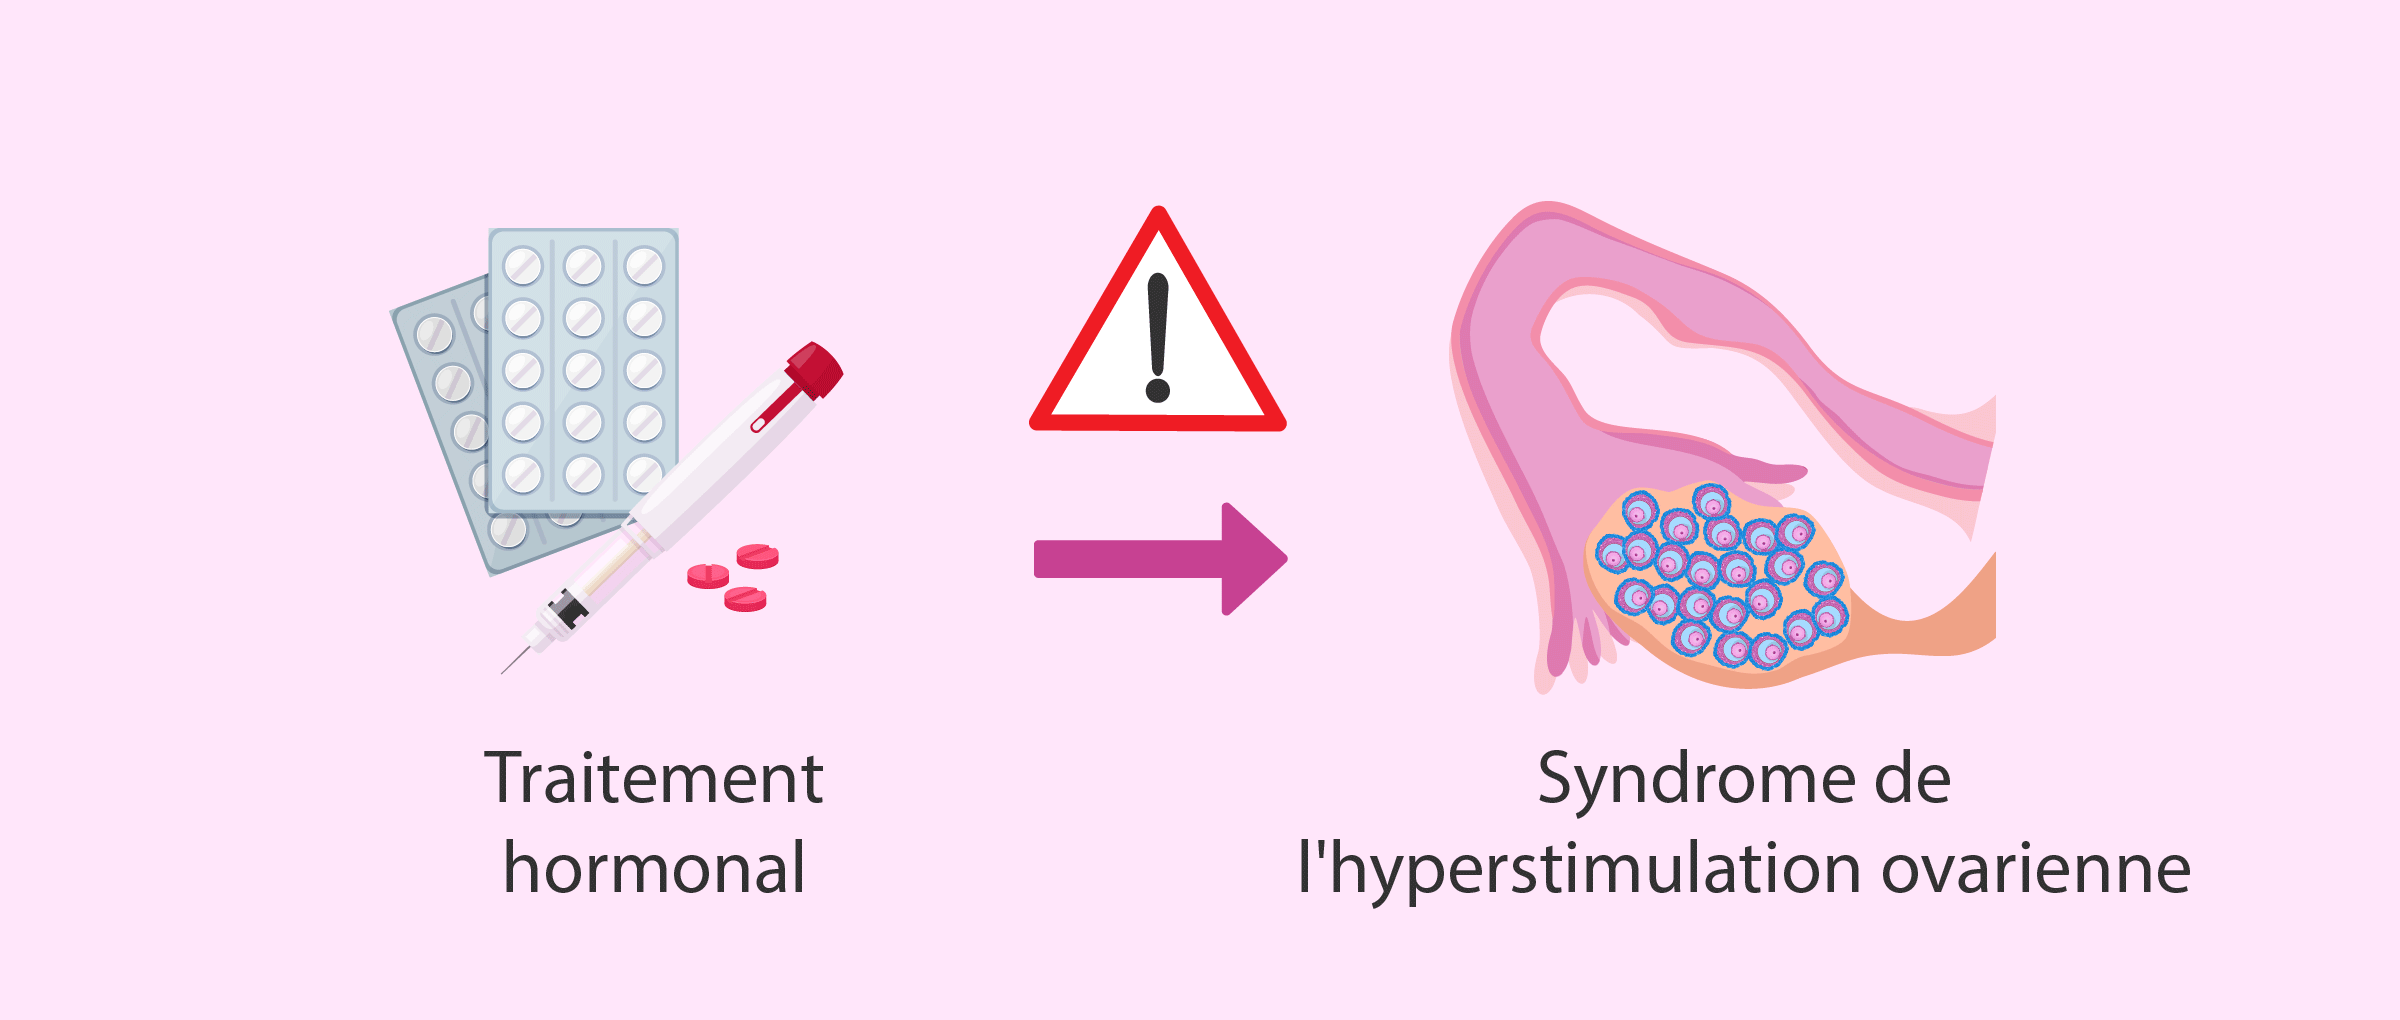 Syndrome d'hyperstimulation ovarienne (SHO)